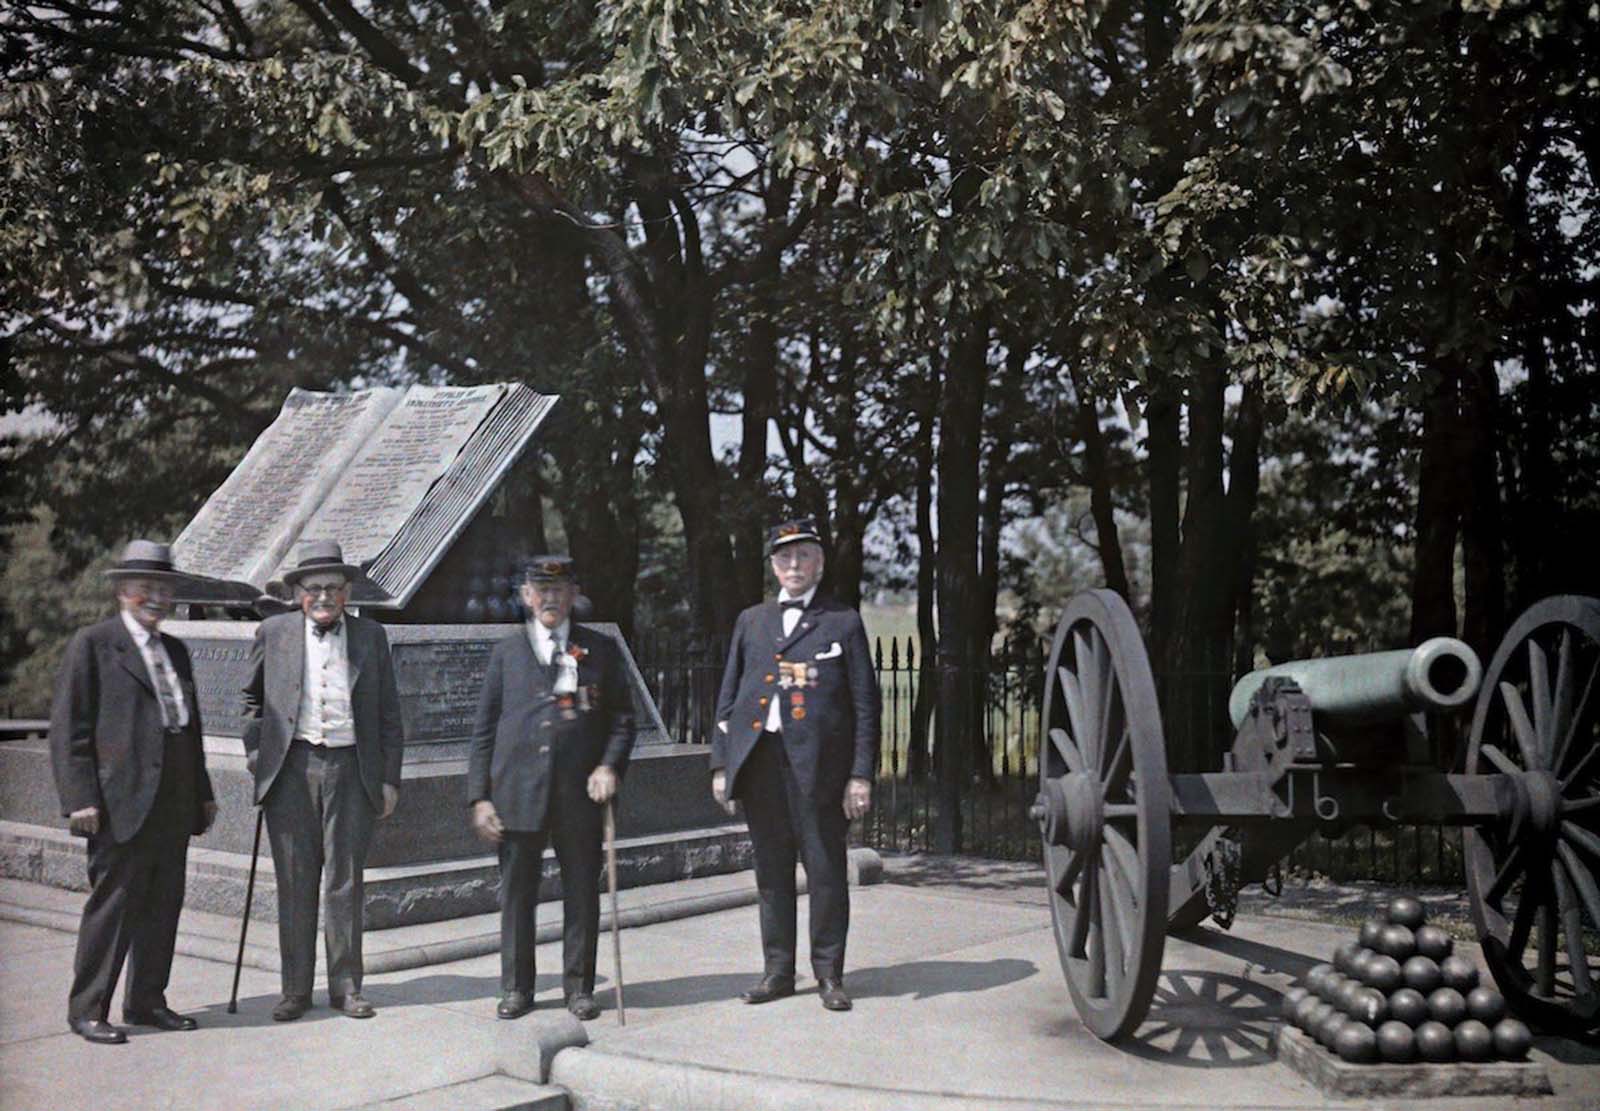 Gettysburg National Military Park, Gettysburg, Pennsylvania — Union Civil War veterans stand in front a monument at Gettysburg. 1931.